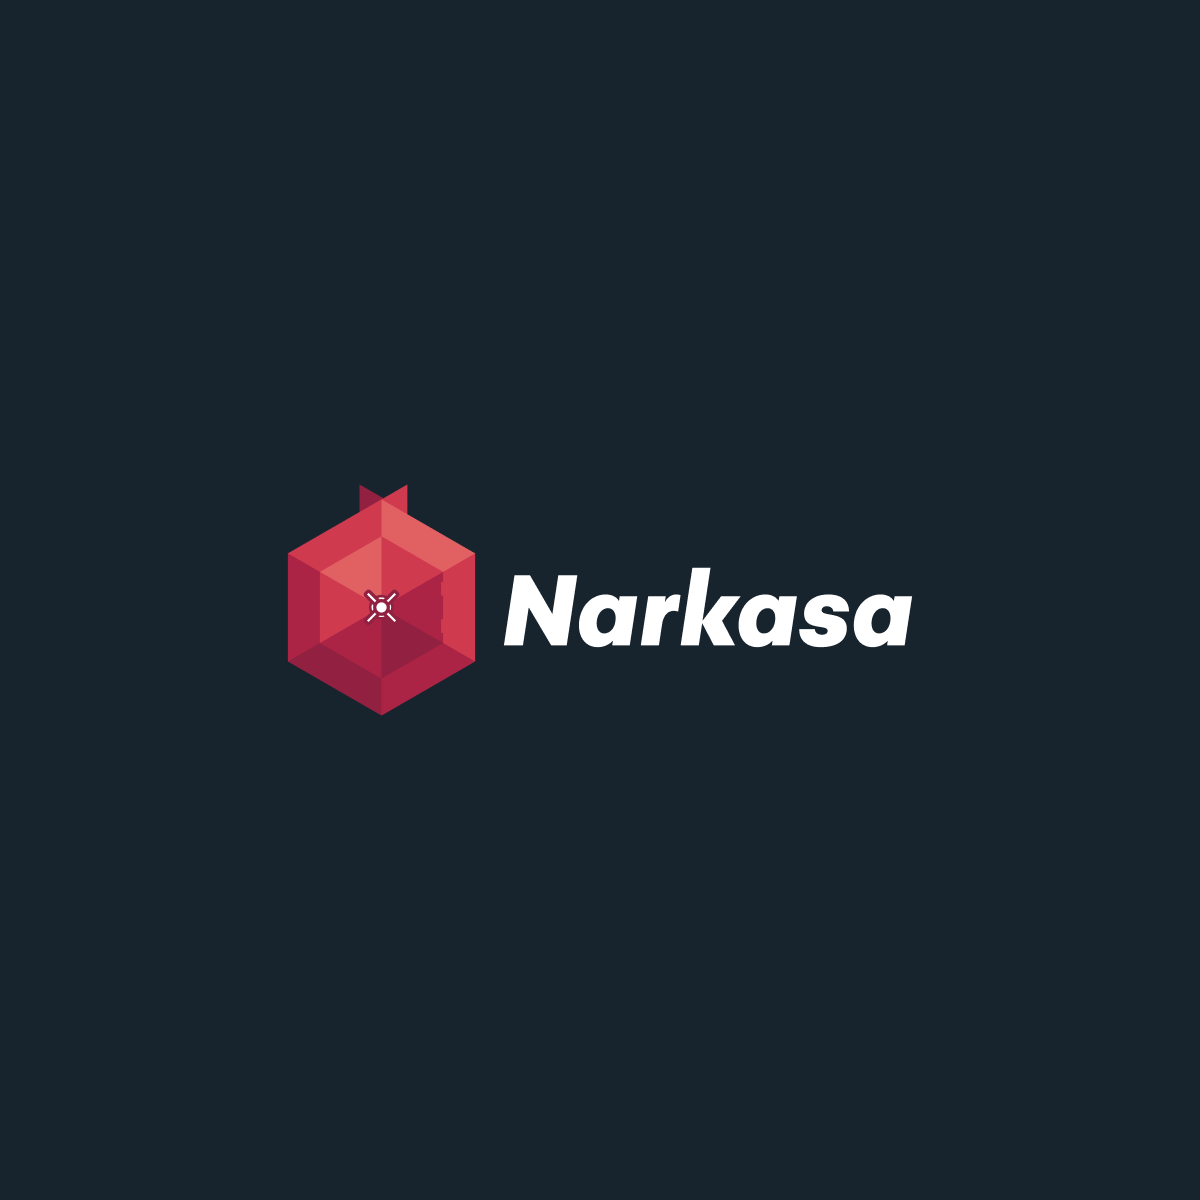 Narkasa-dark-logo